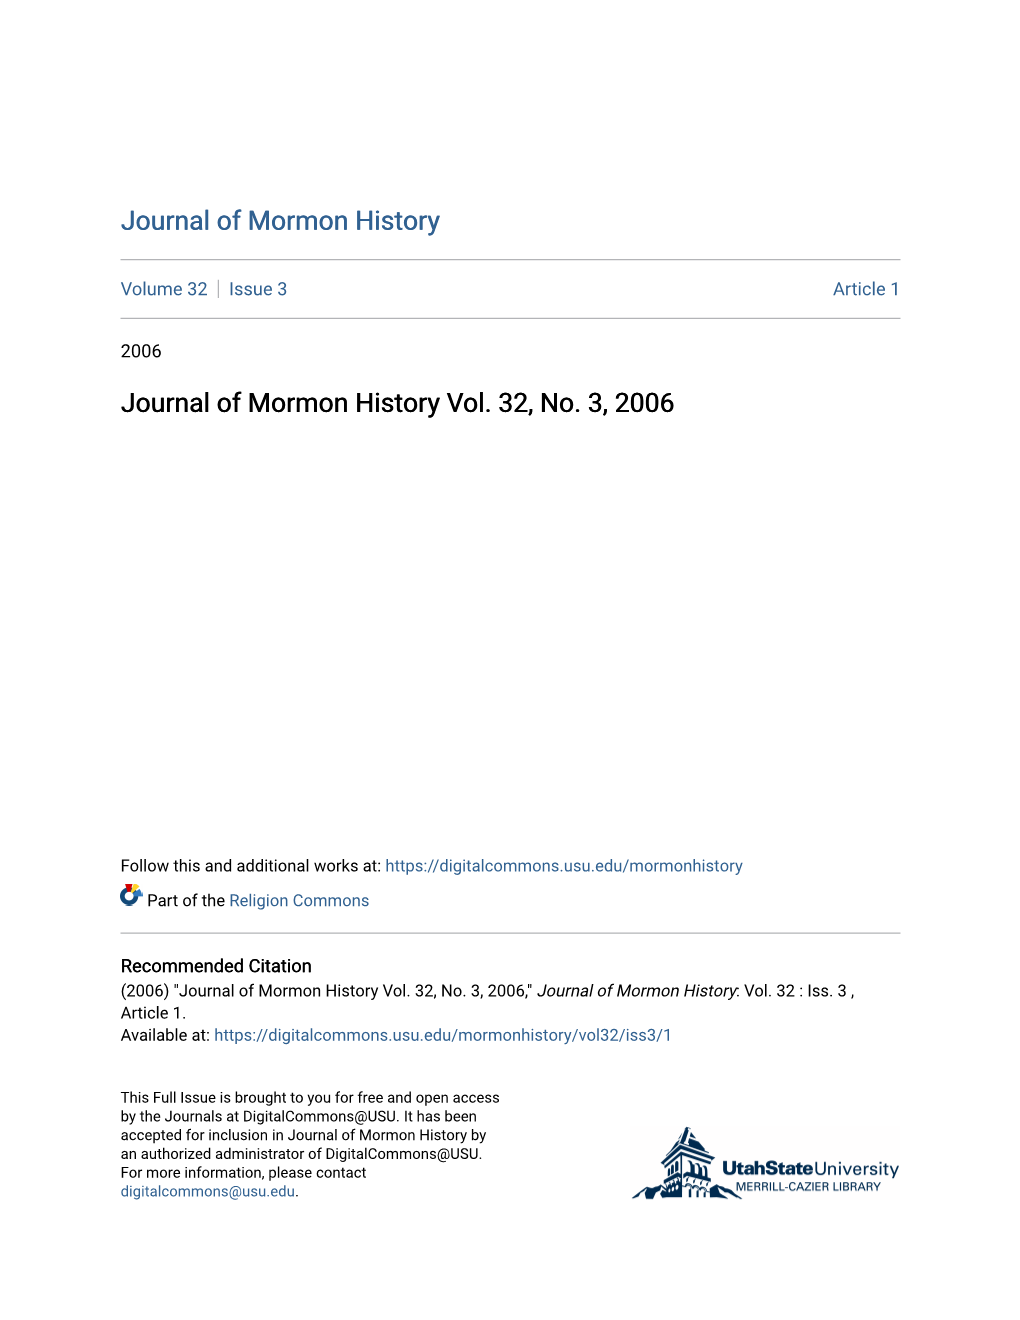 Journal of Mormon History Vol. 32, No. 3, 2006